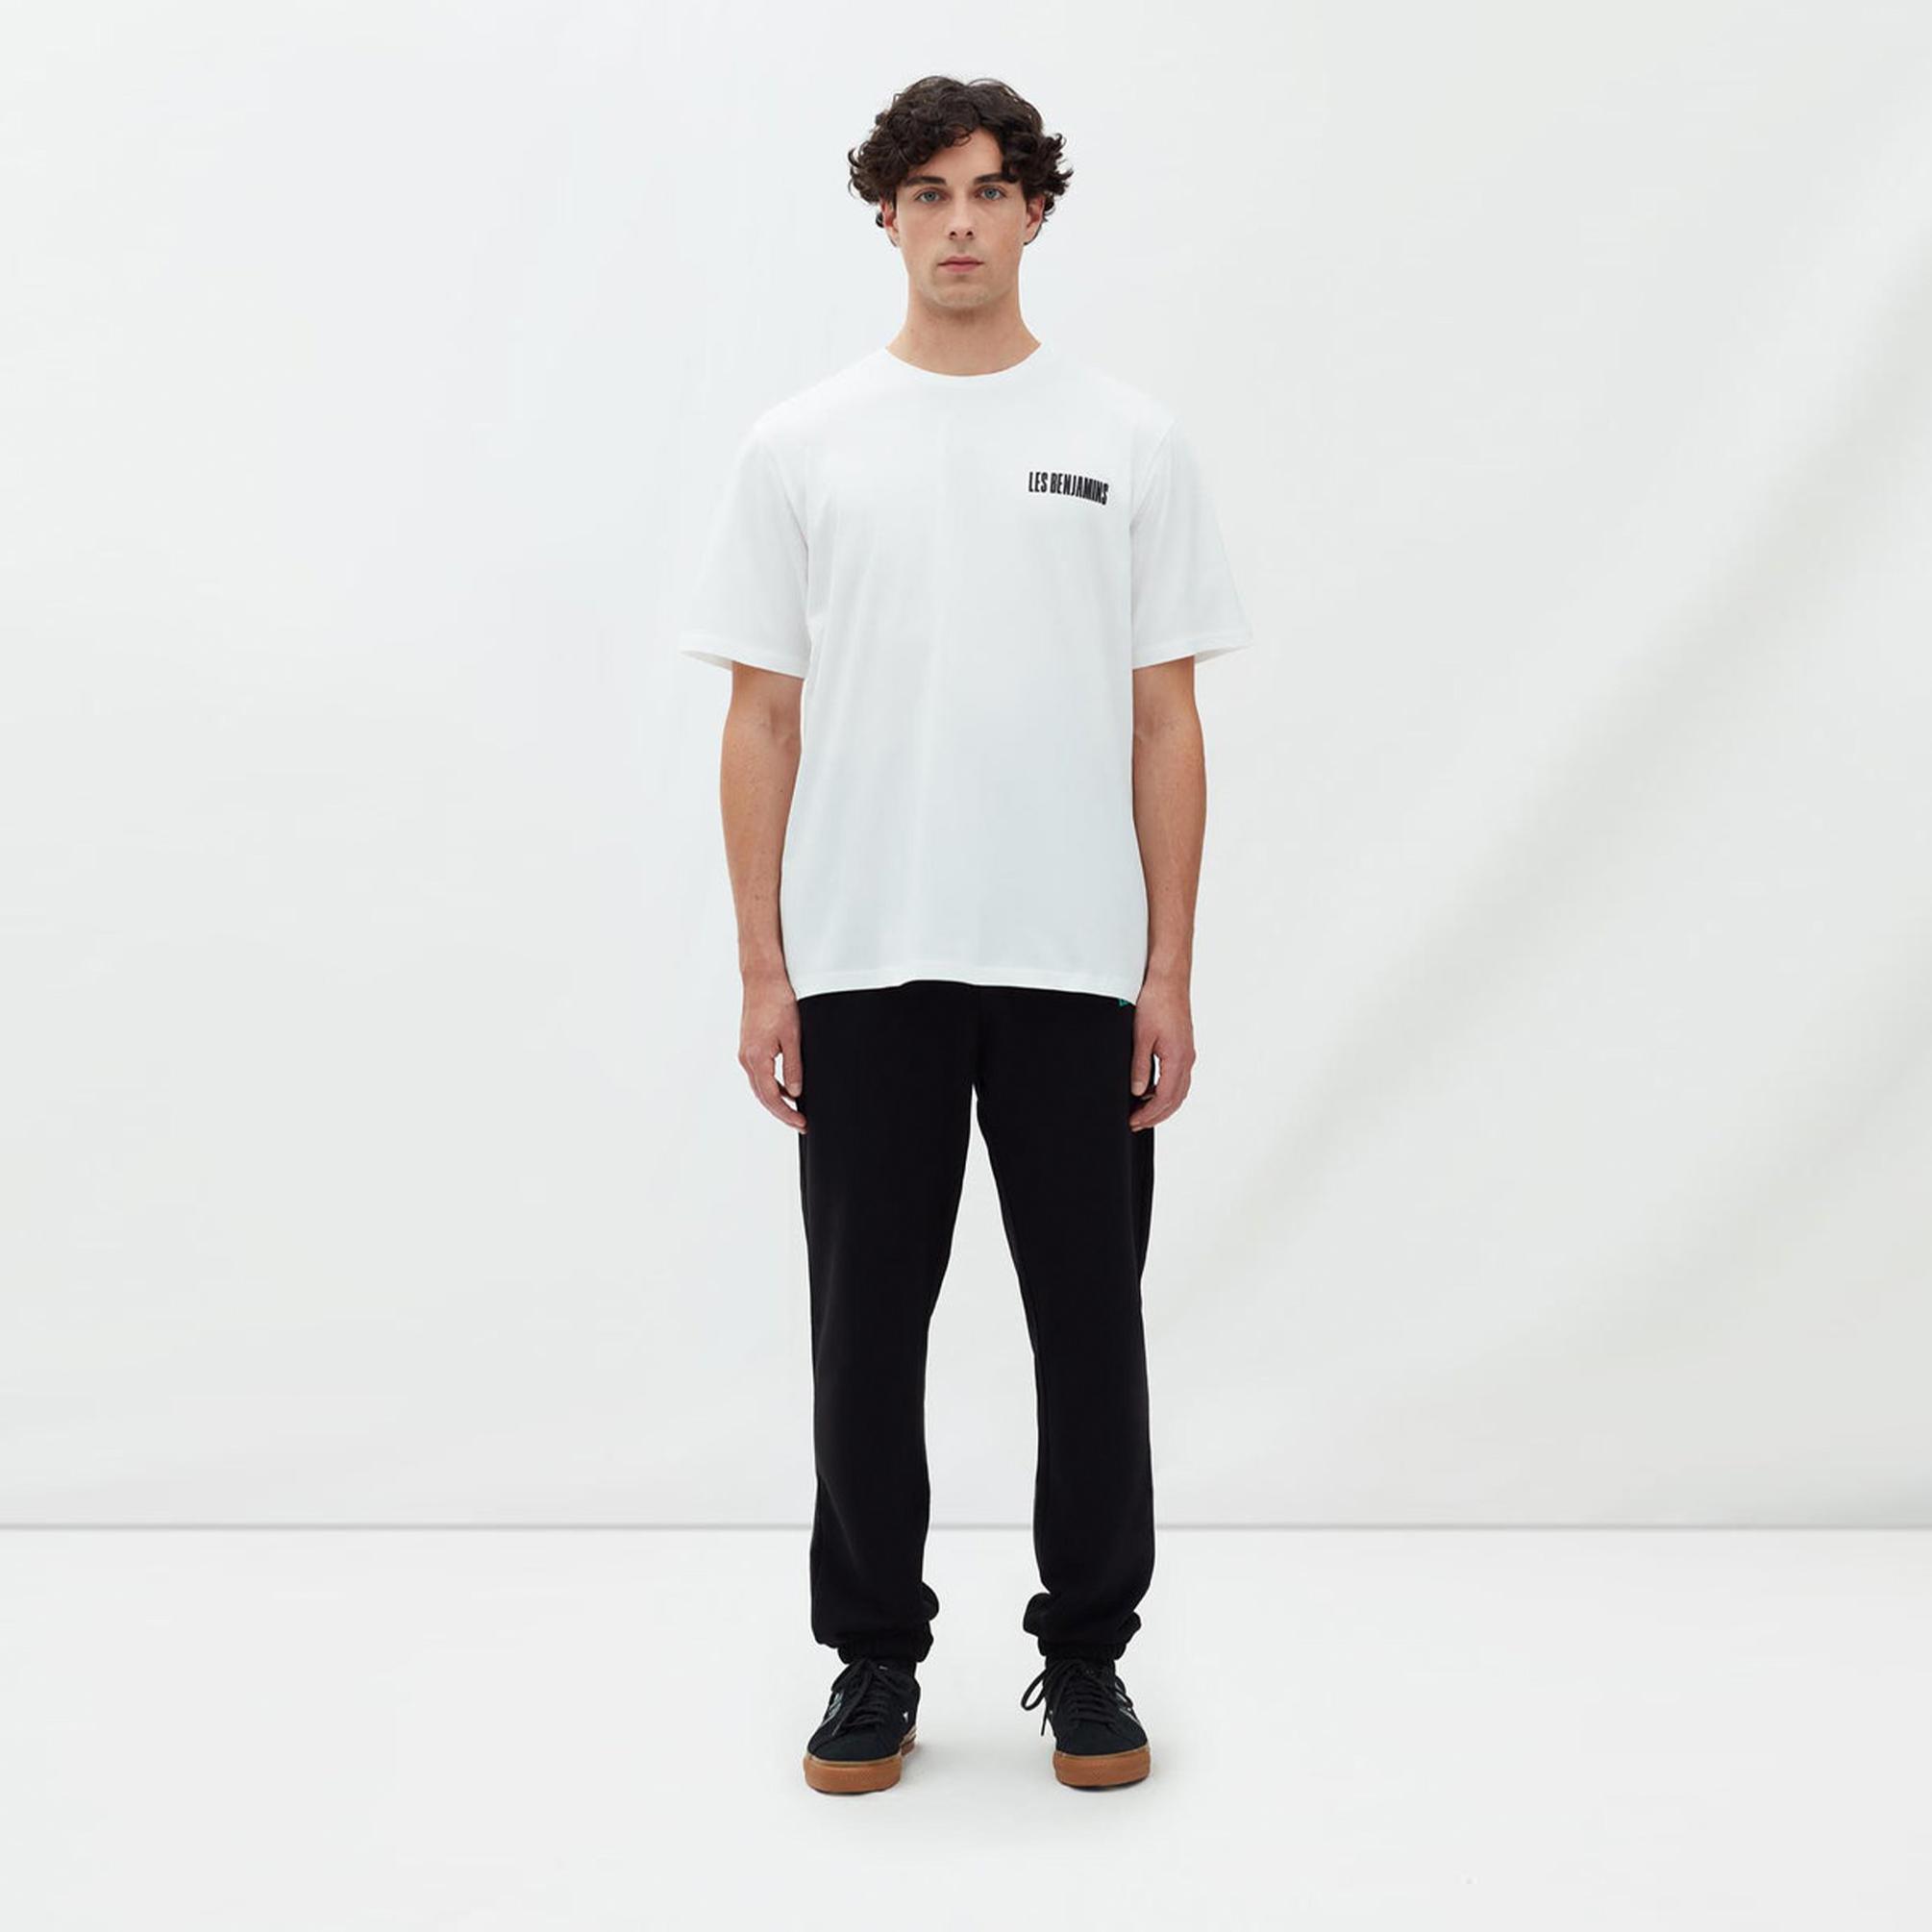  Les Benjamins Wholesale Exclusives Erkek Beyaz T-Shirt